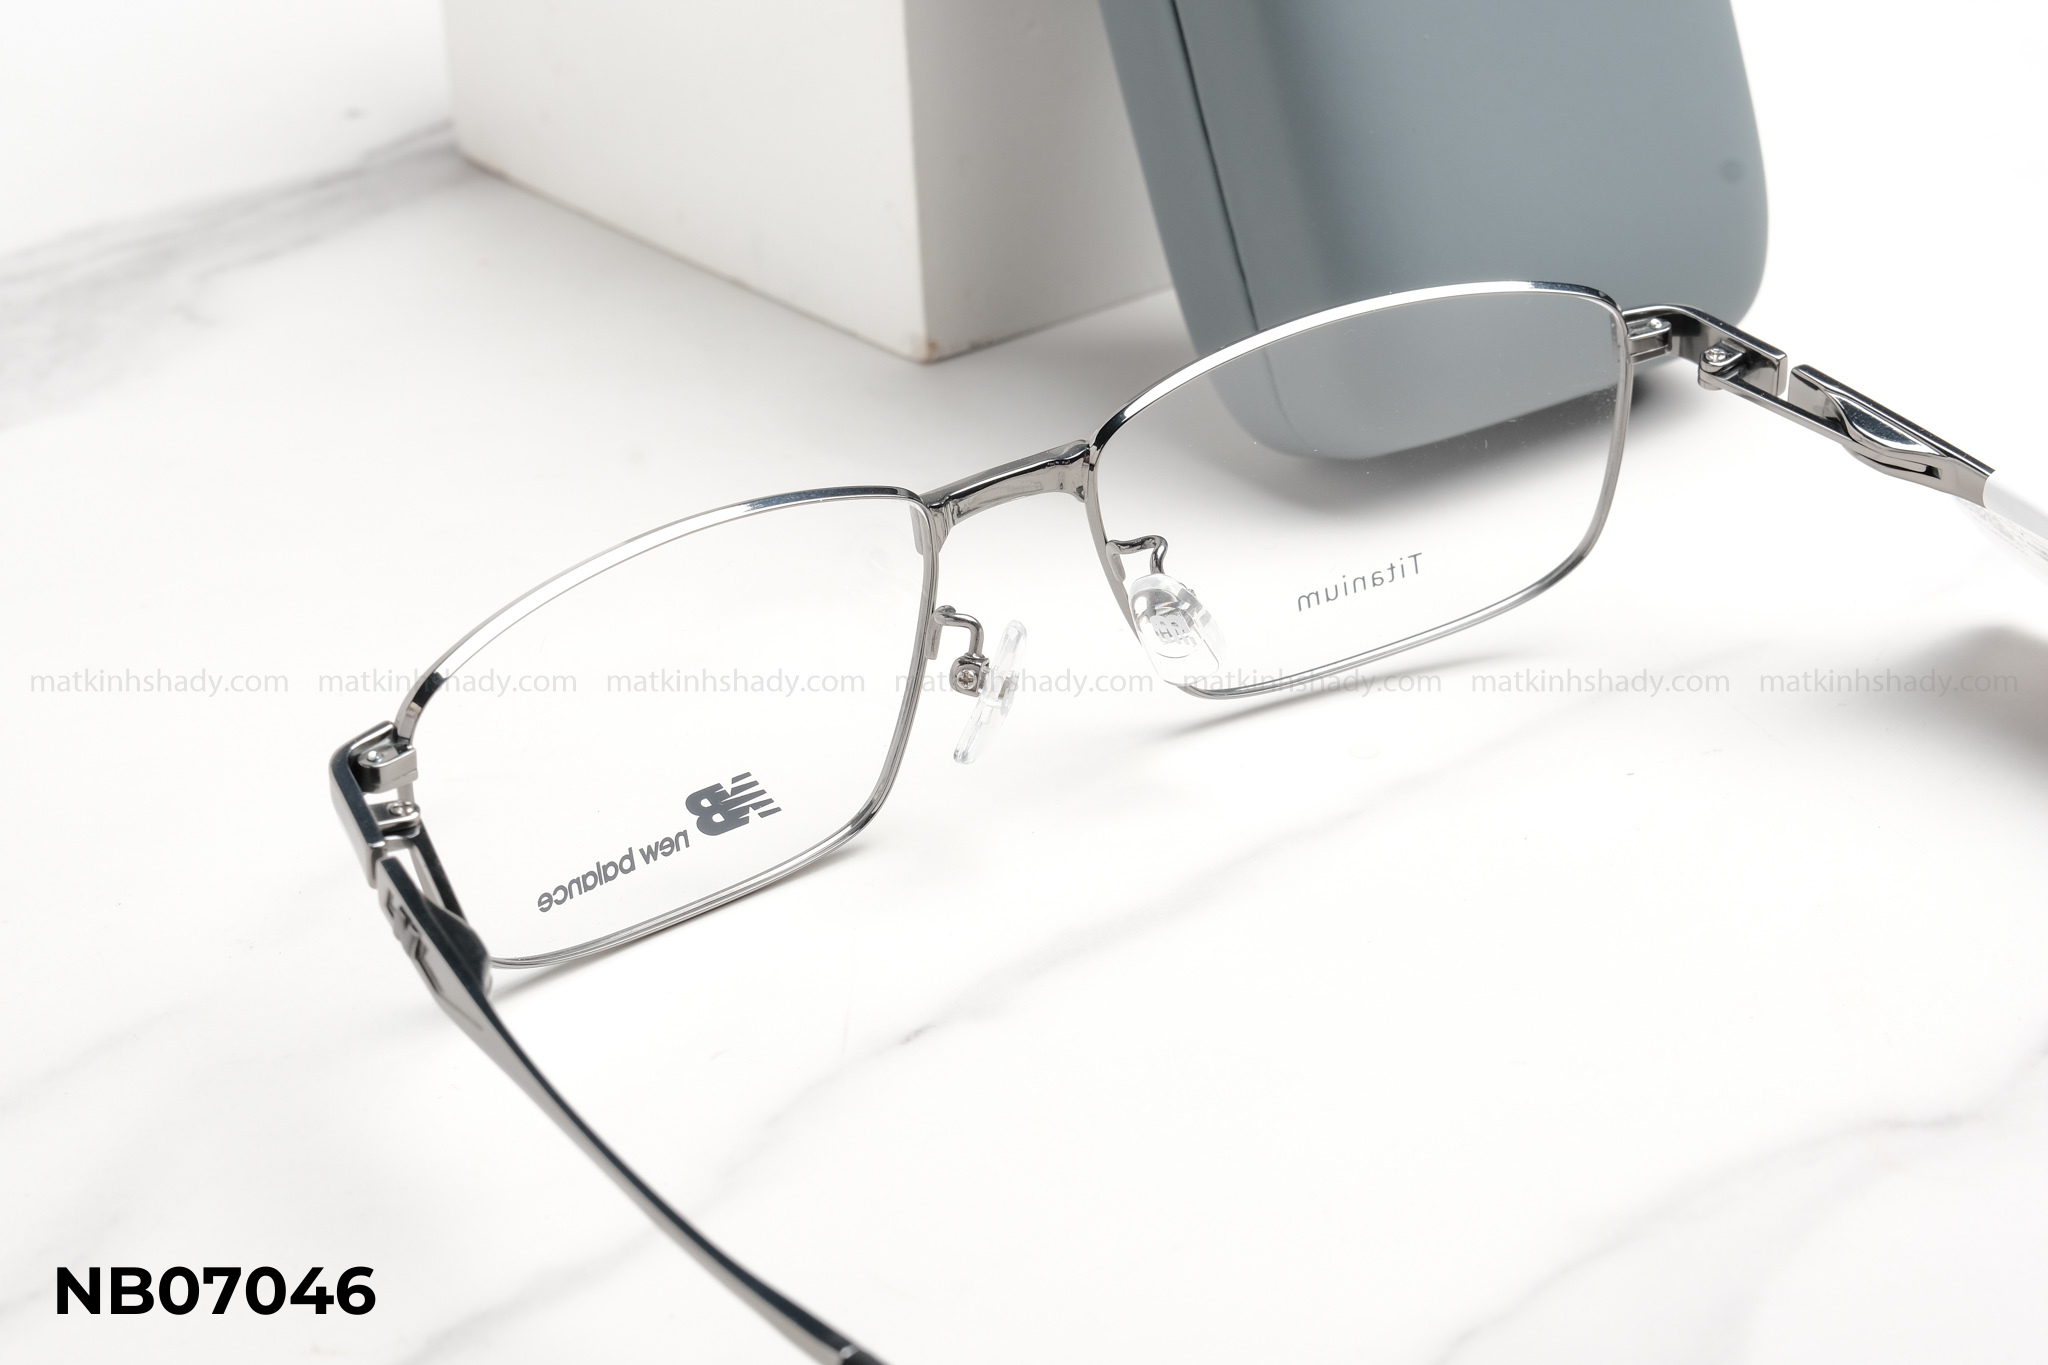  New Balance Eyewear - Glasses - NB07046 